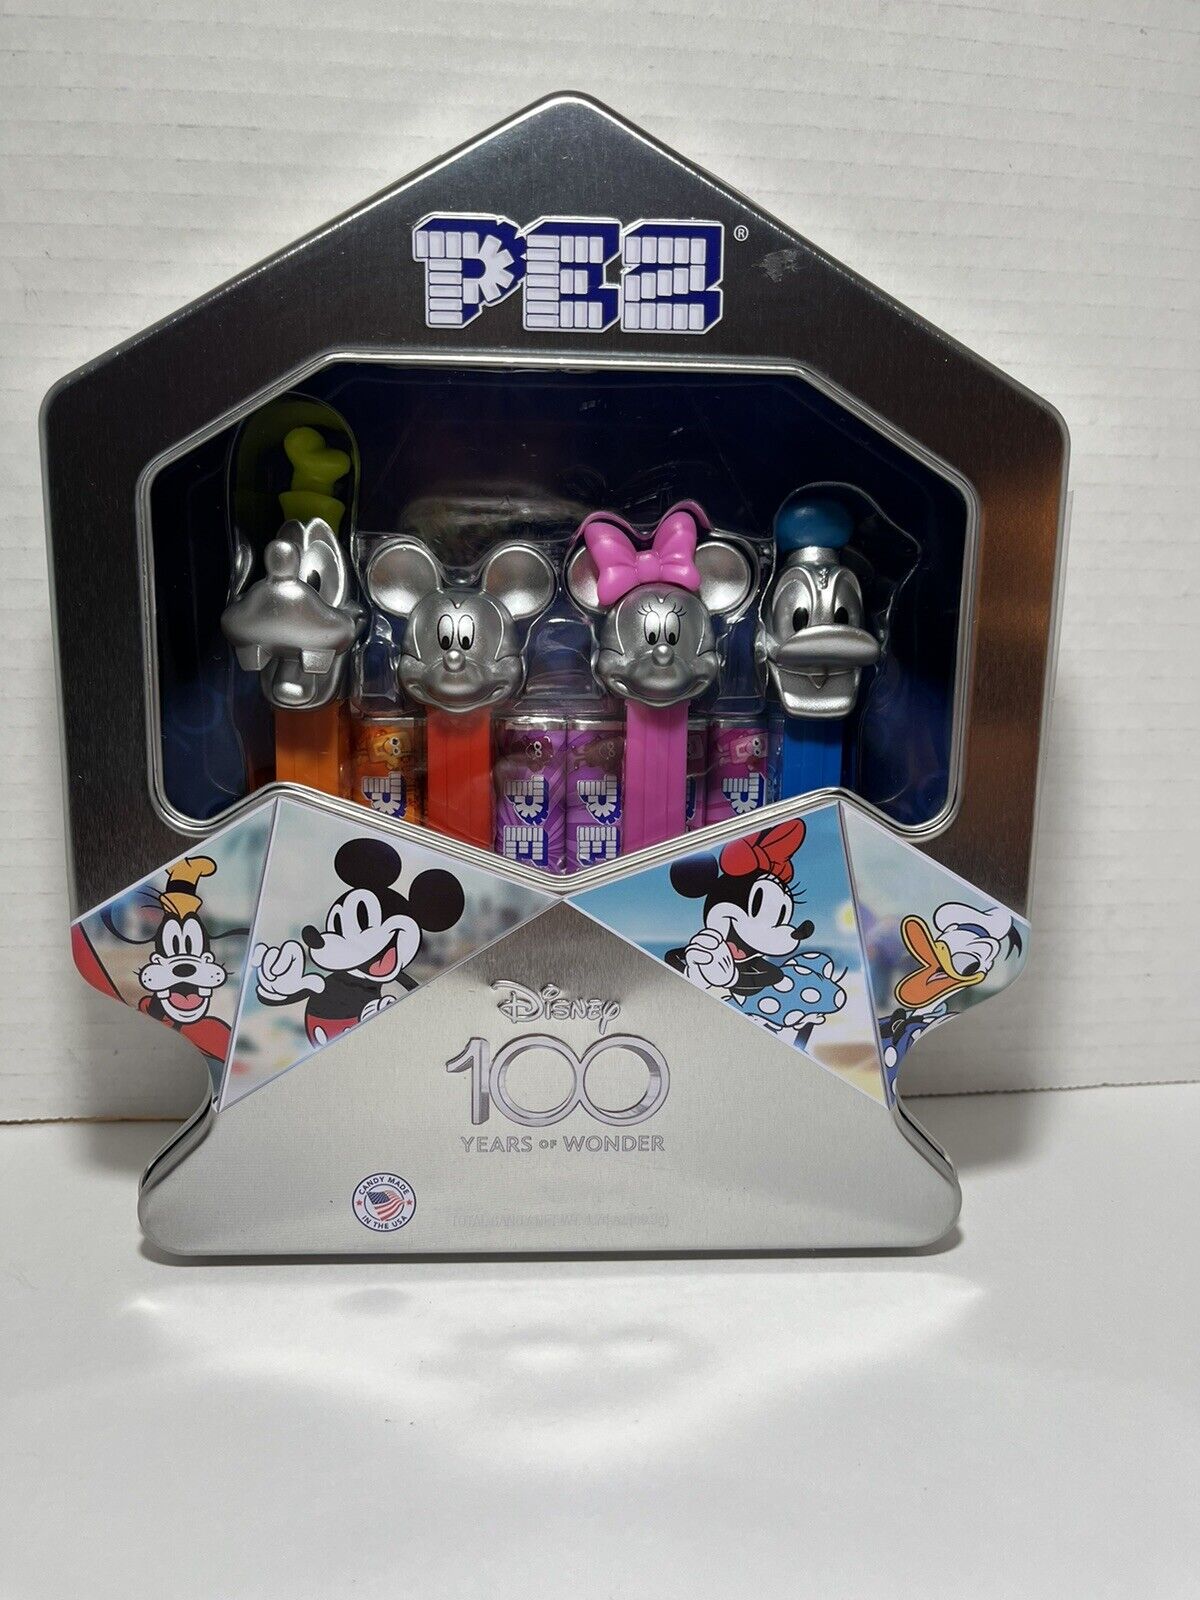 Disney 100 Years Of Wonder PEZ Platinum Anniversary Edition Tin Exp. 9/27 *MINT